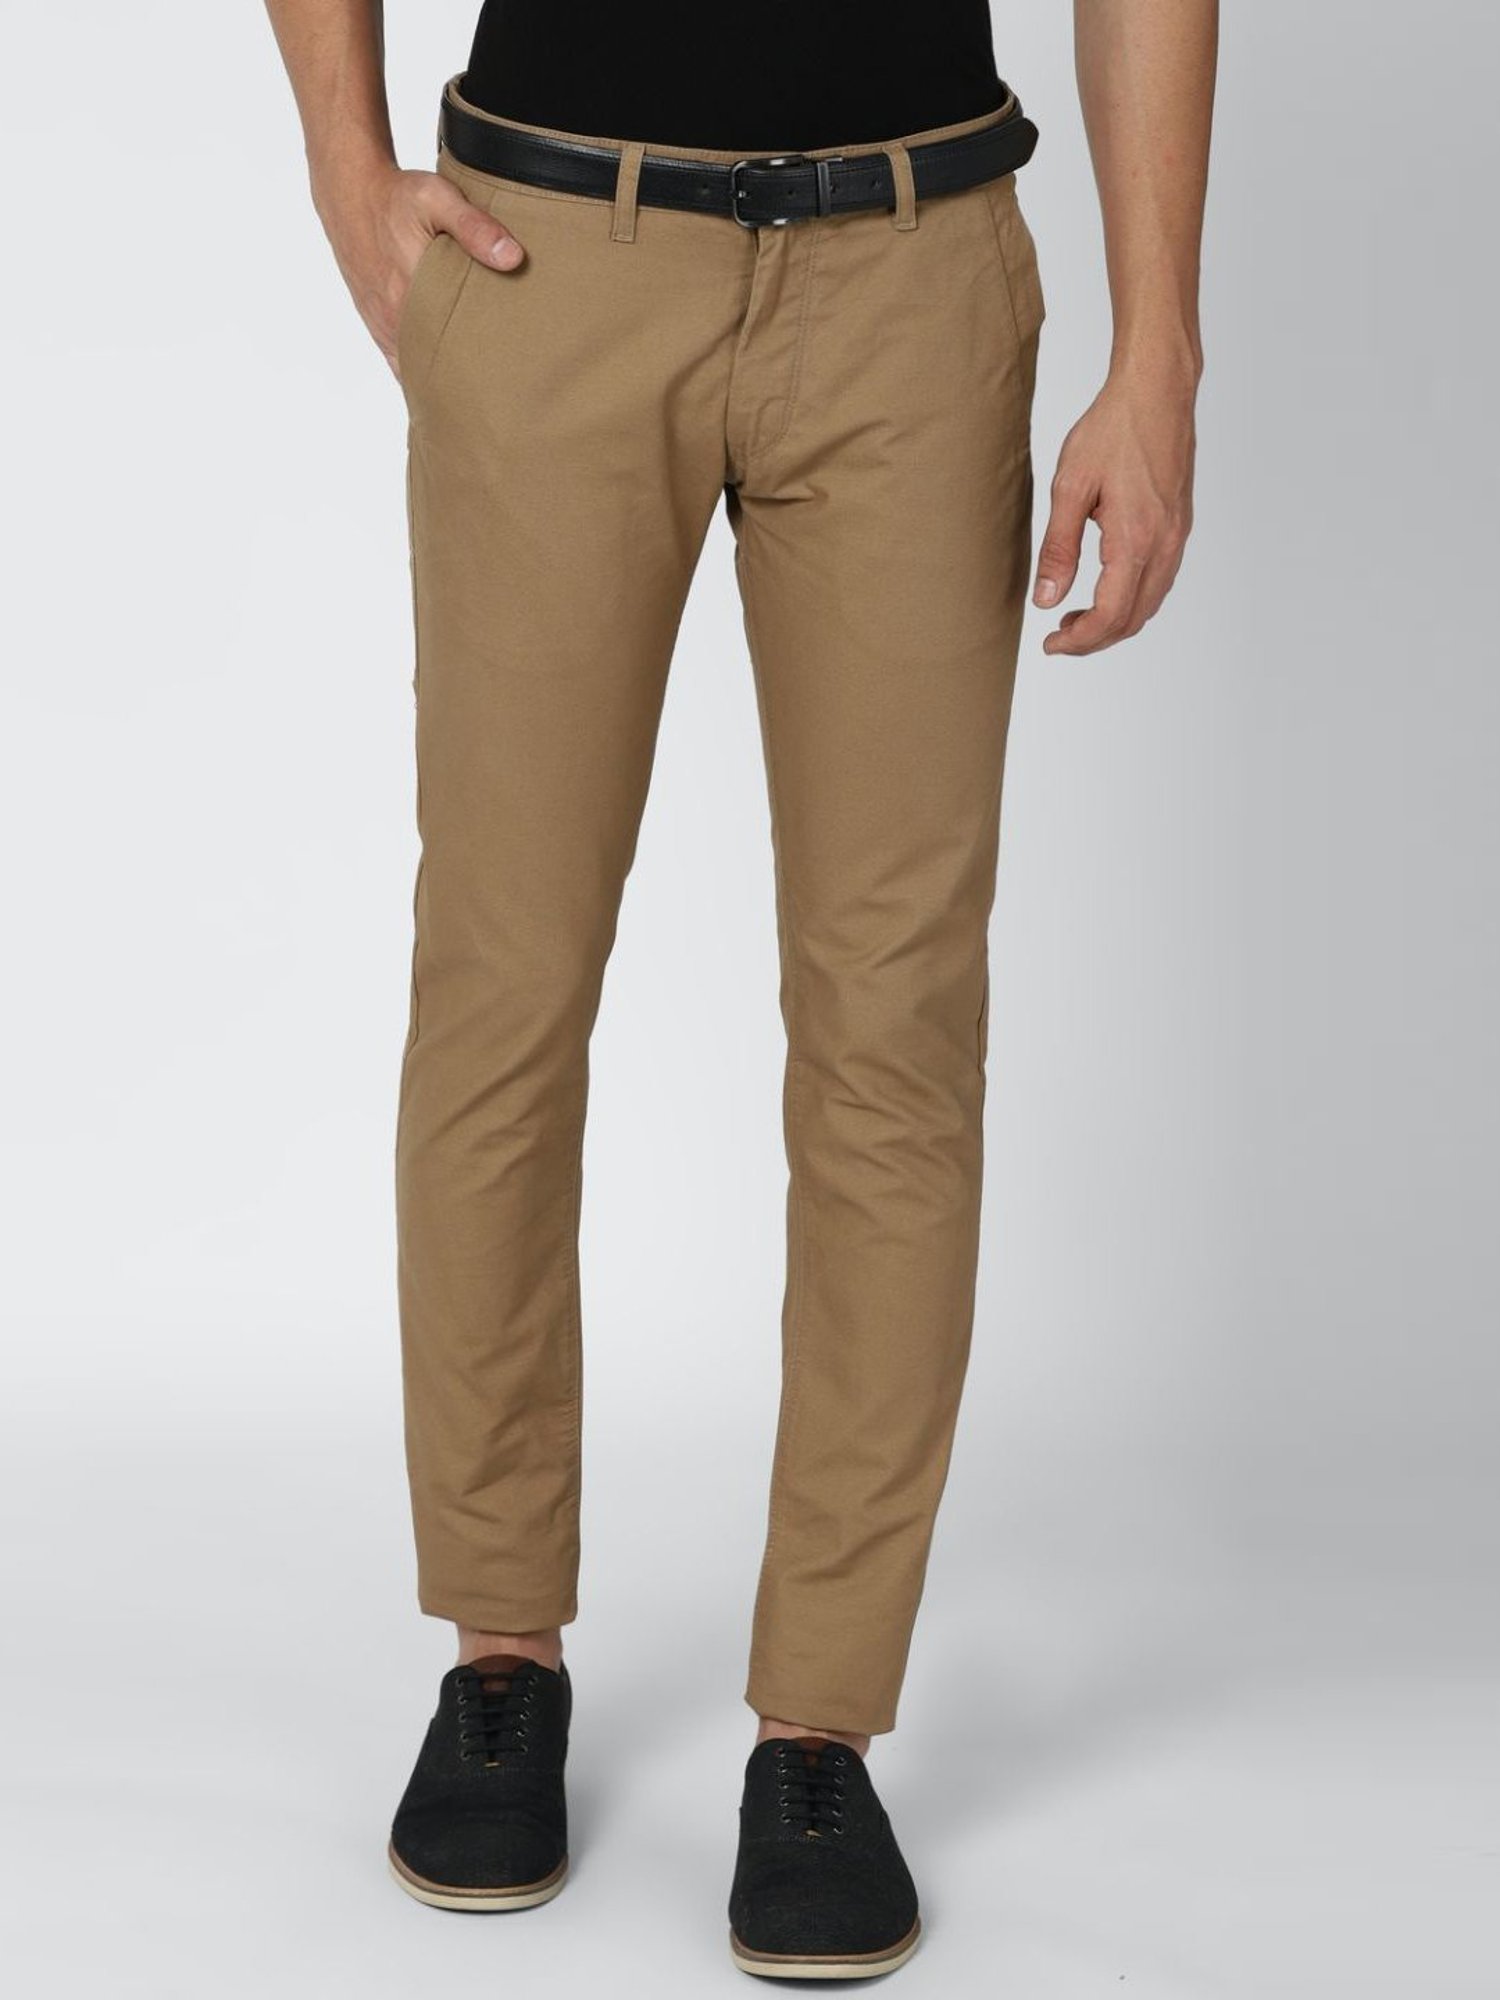 Spykar Mud Brown Cotton Slim Fit Regular Length Trousers For Men   vot02bbcg034mudbrown